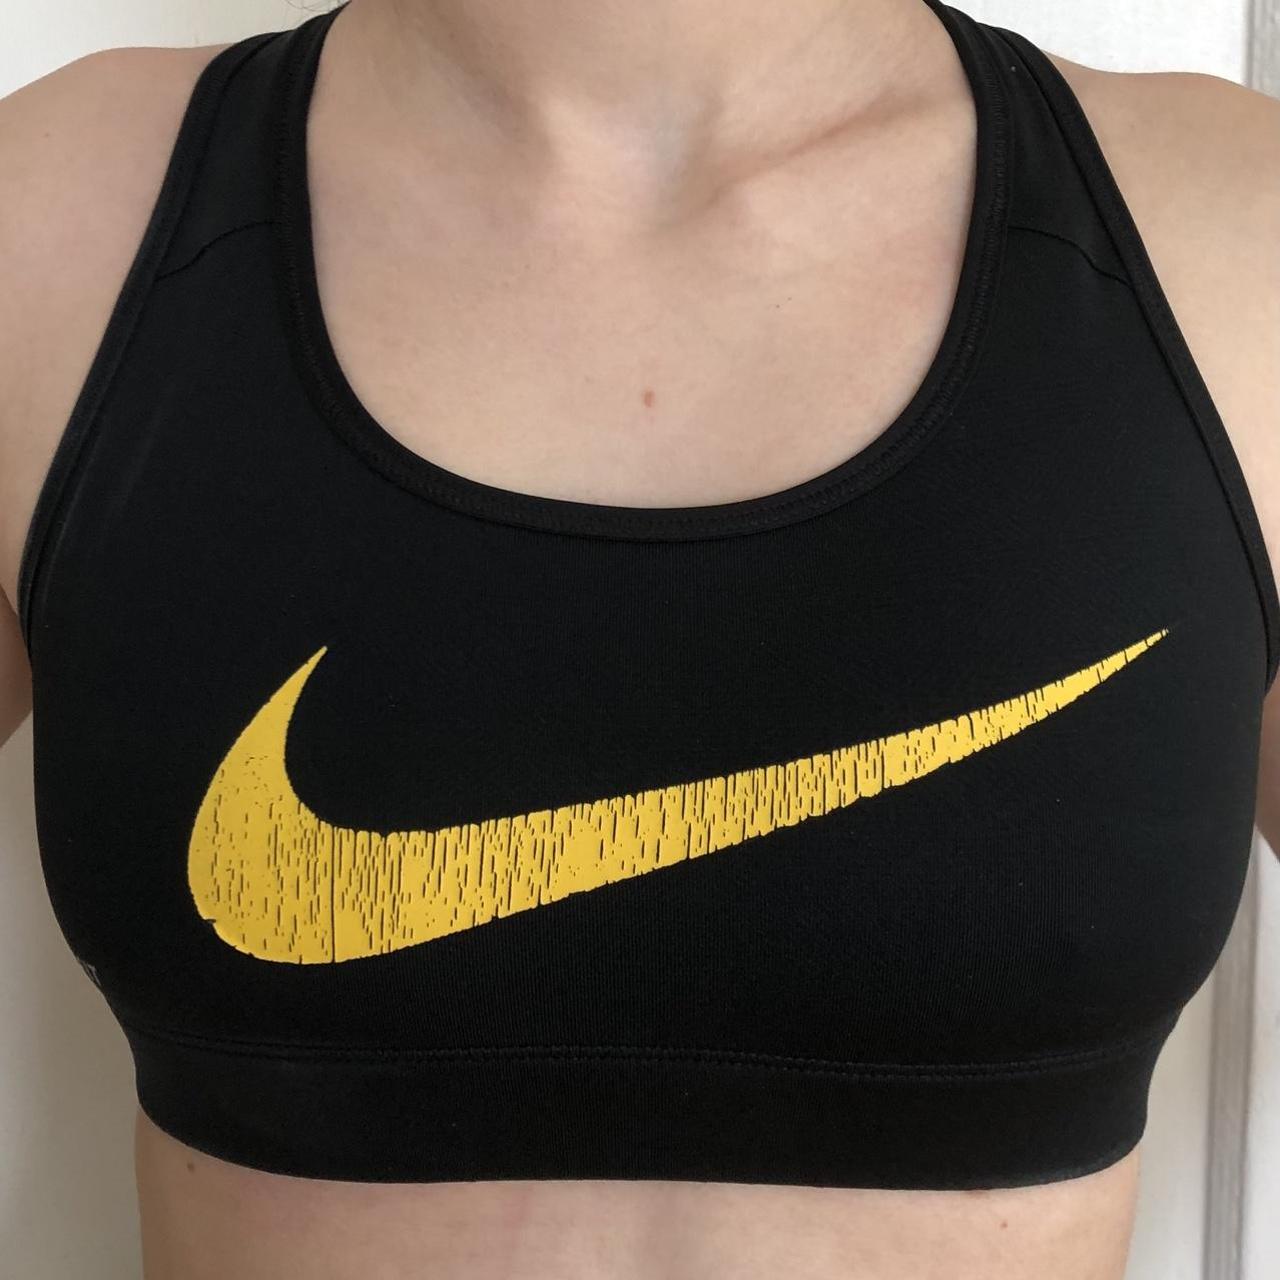 Nike Pro Dri Fit nike sports bra size small selling - Depop